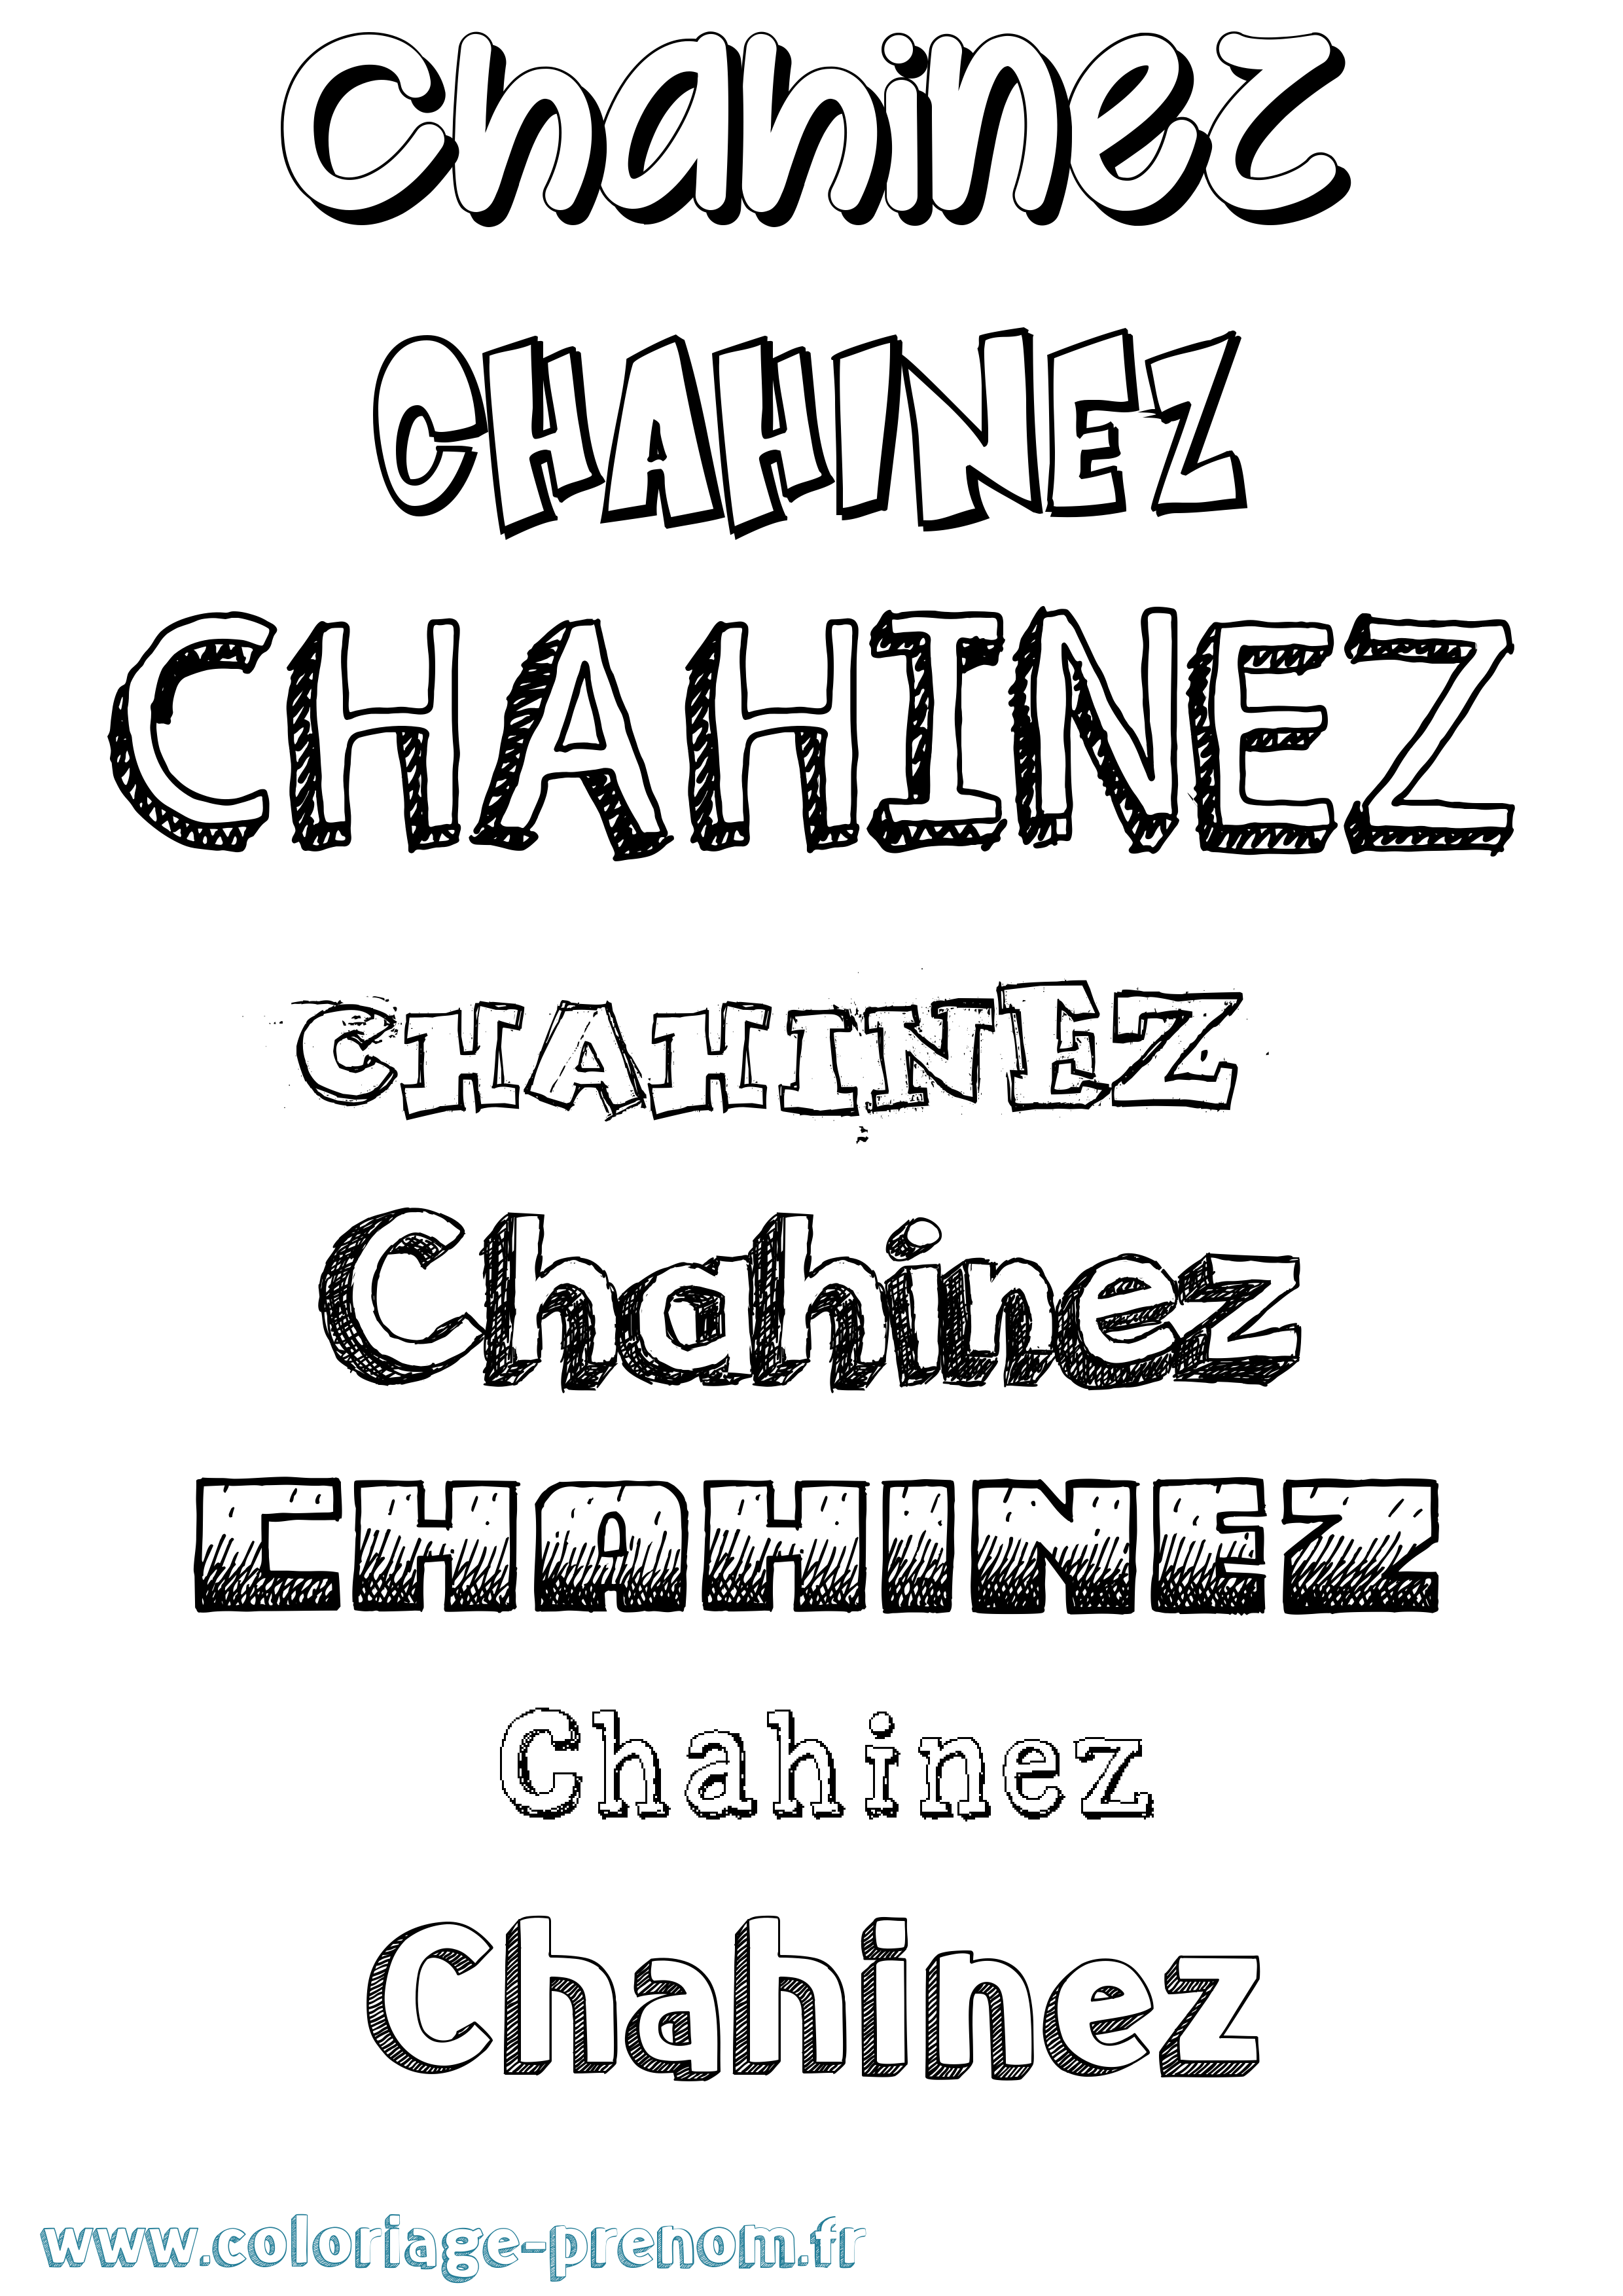 Coloriage prénom Chahinez